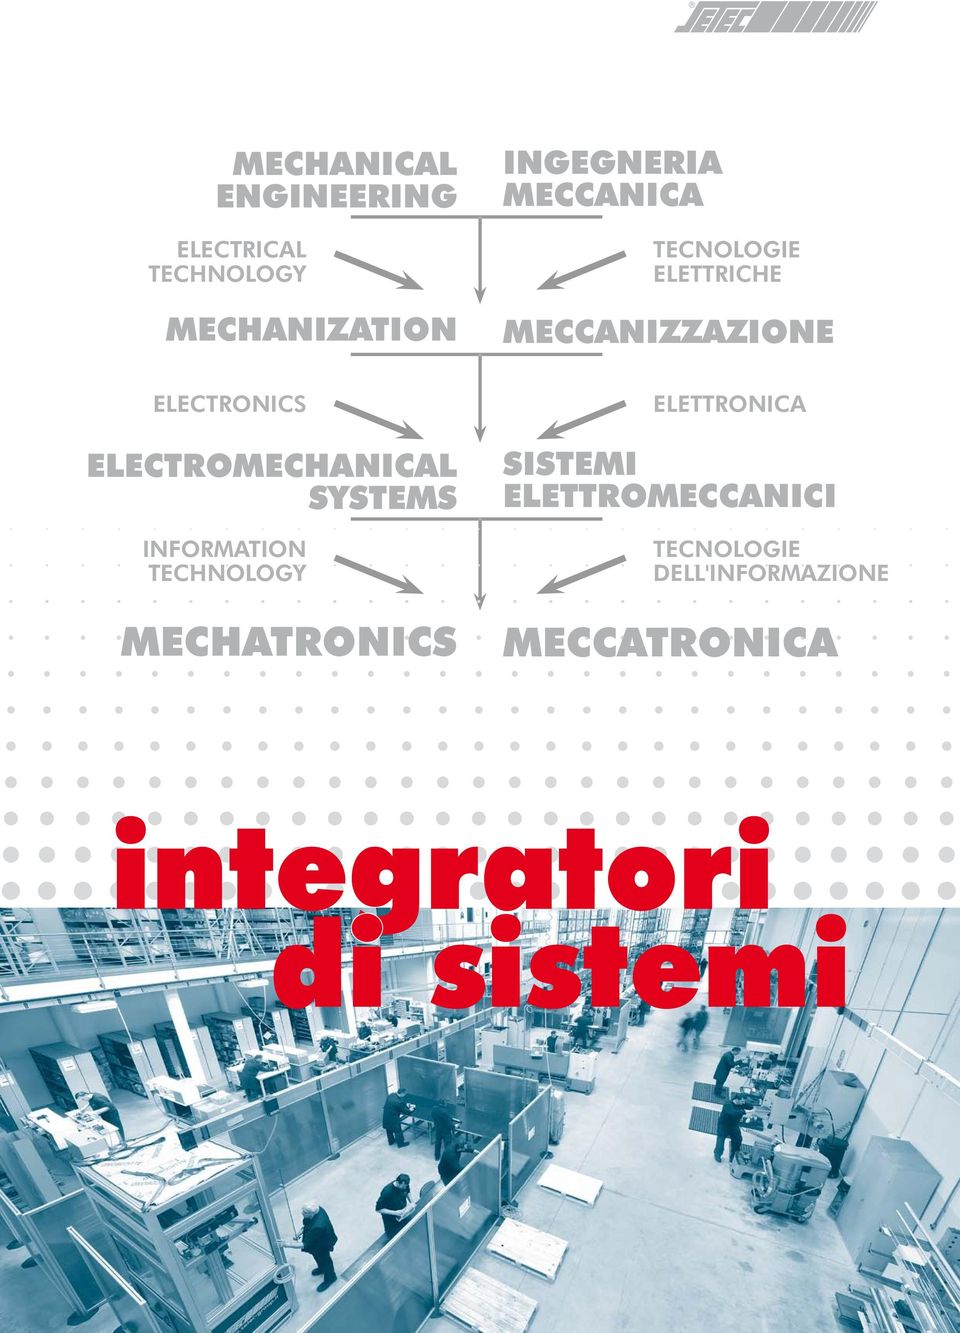 ELECTROMECHANICAL SYSTEMS INFORMATION TECHNOLOGY MECHATRONICS ELETTRONICA